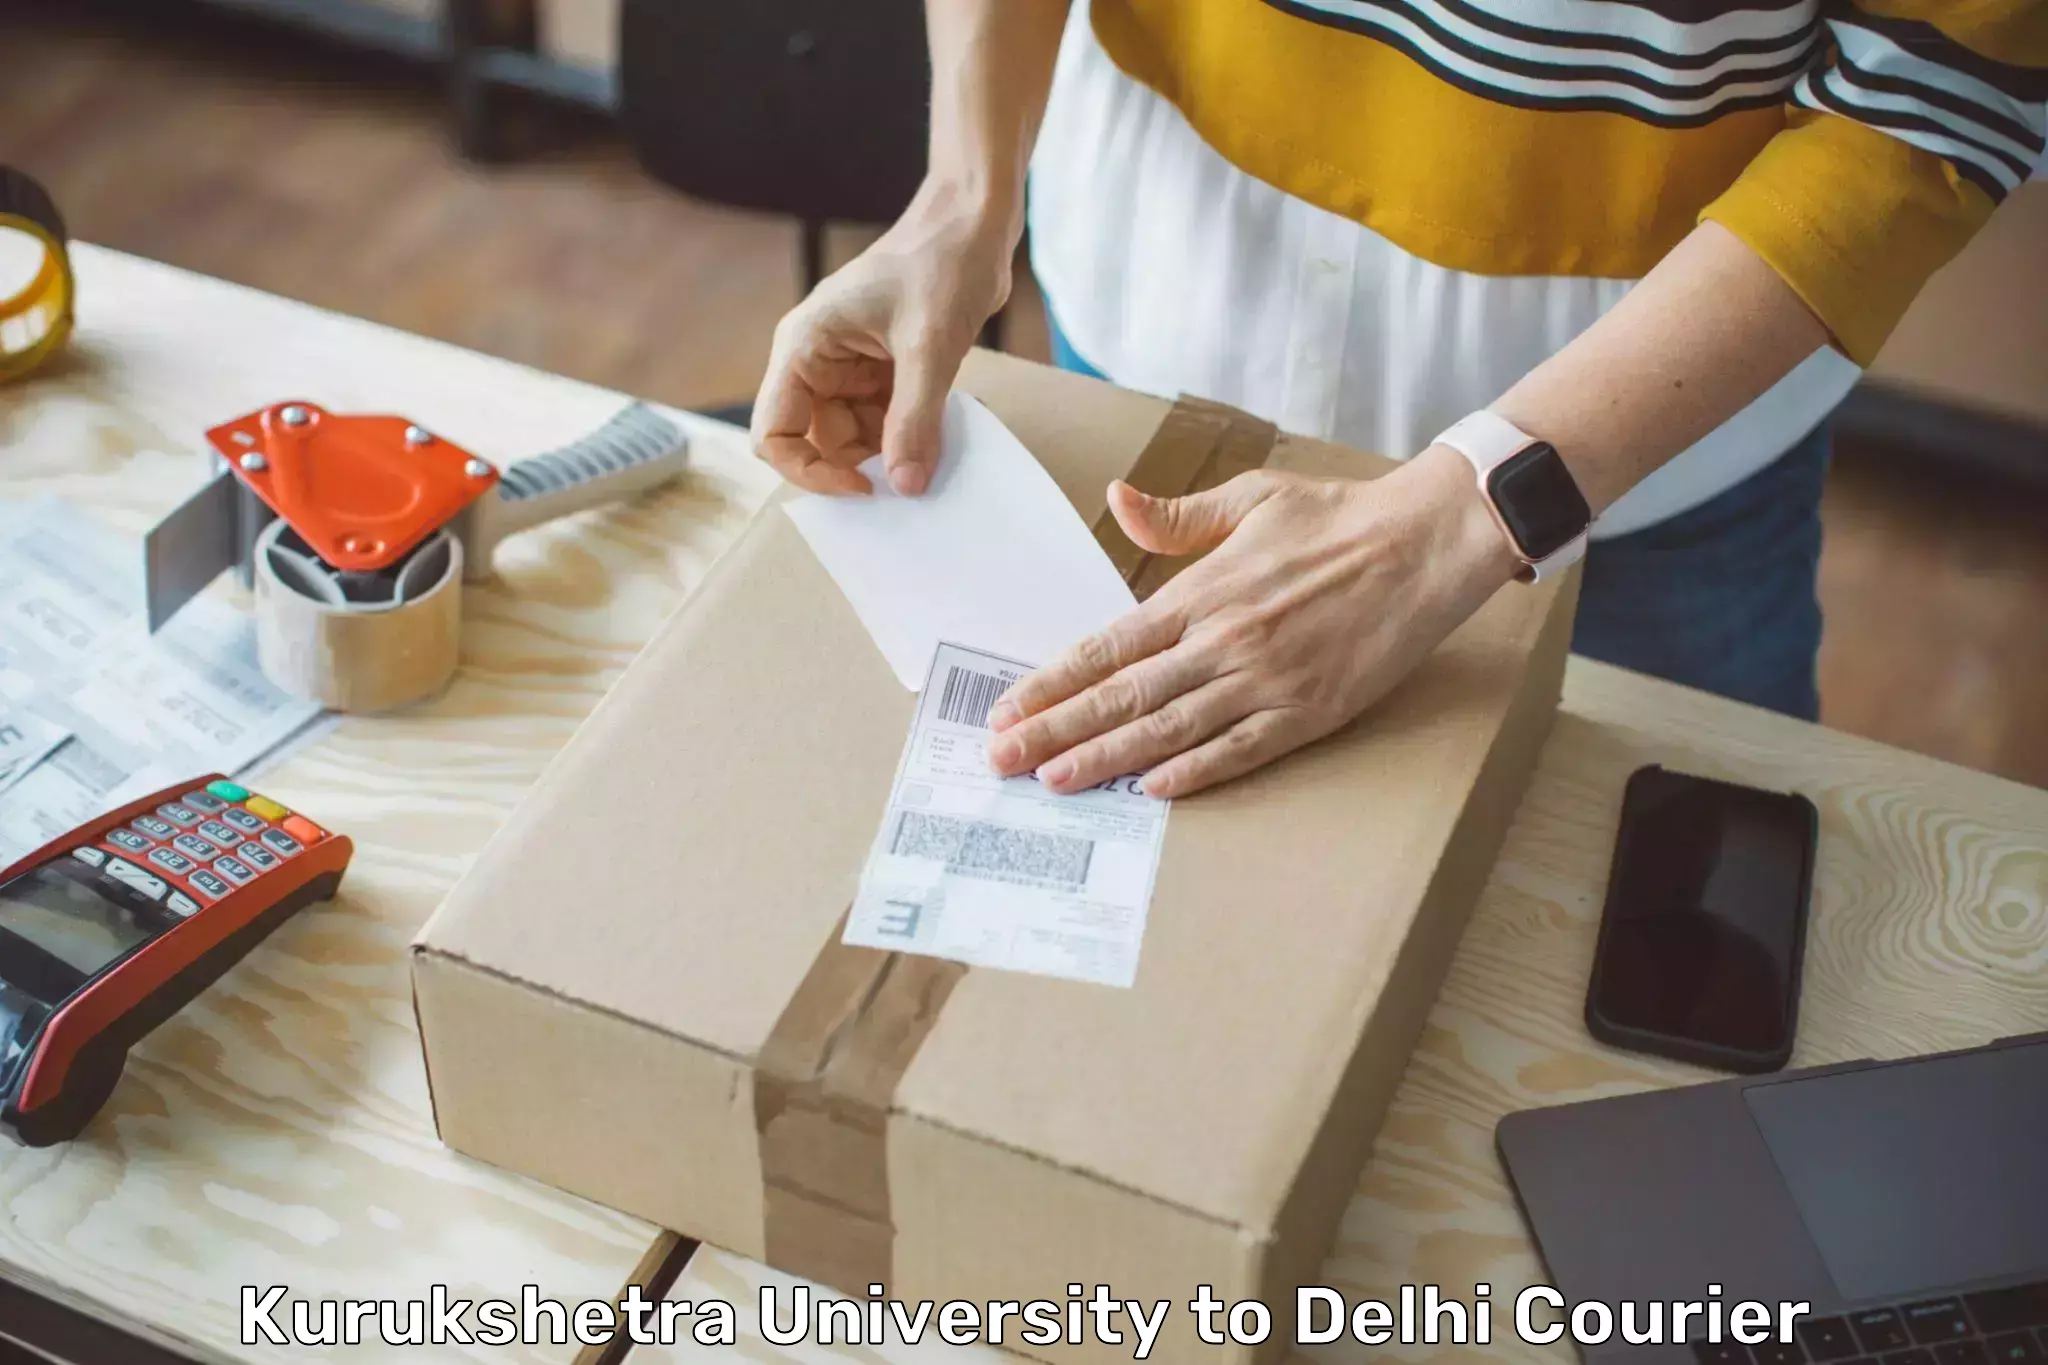 Express logistics service Kurukshetra University to University of Delhi